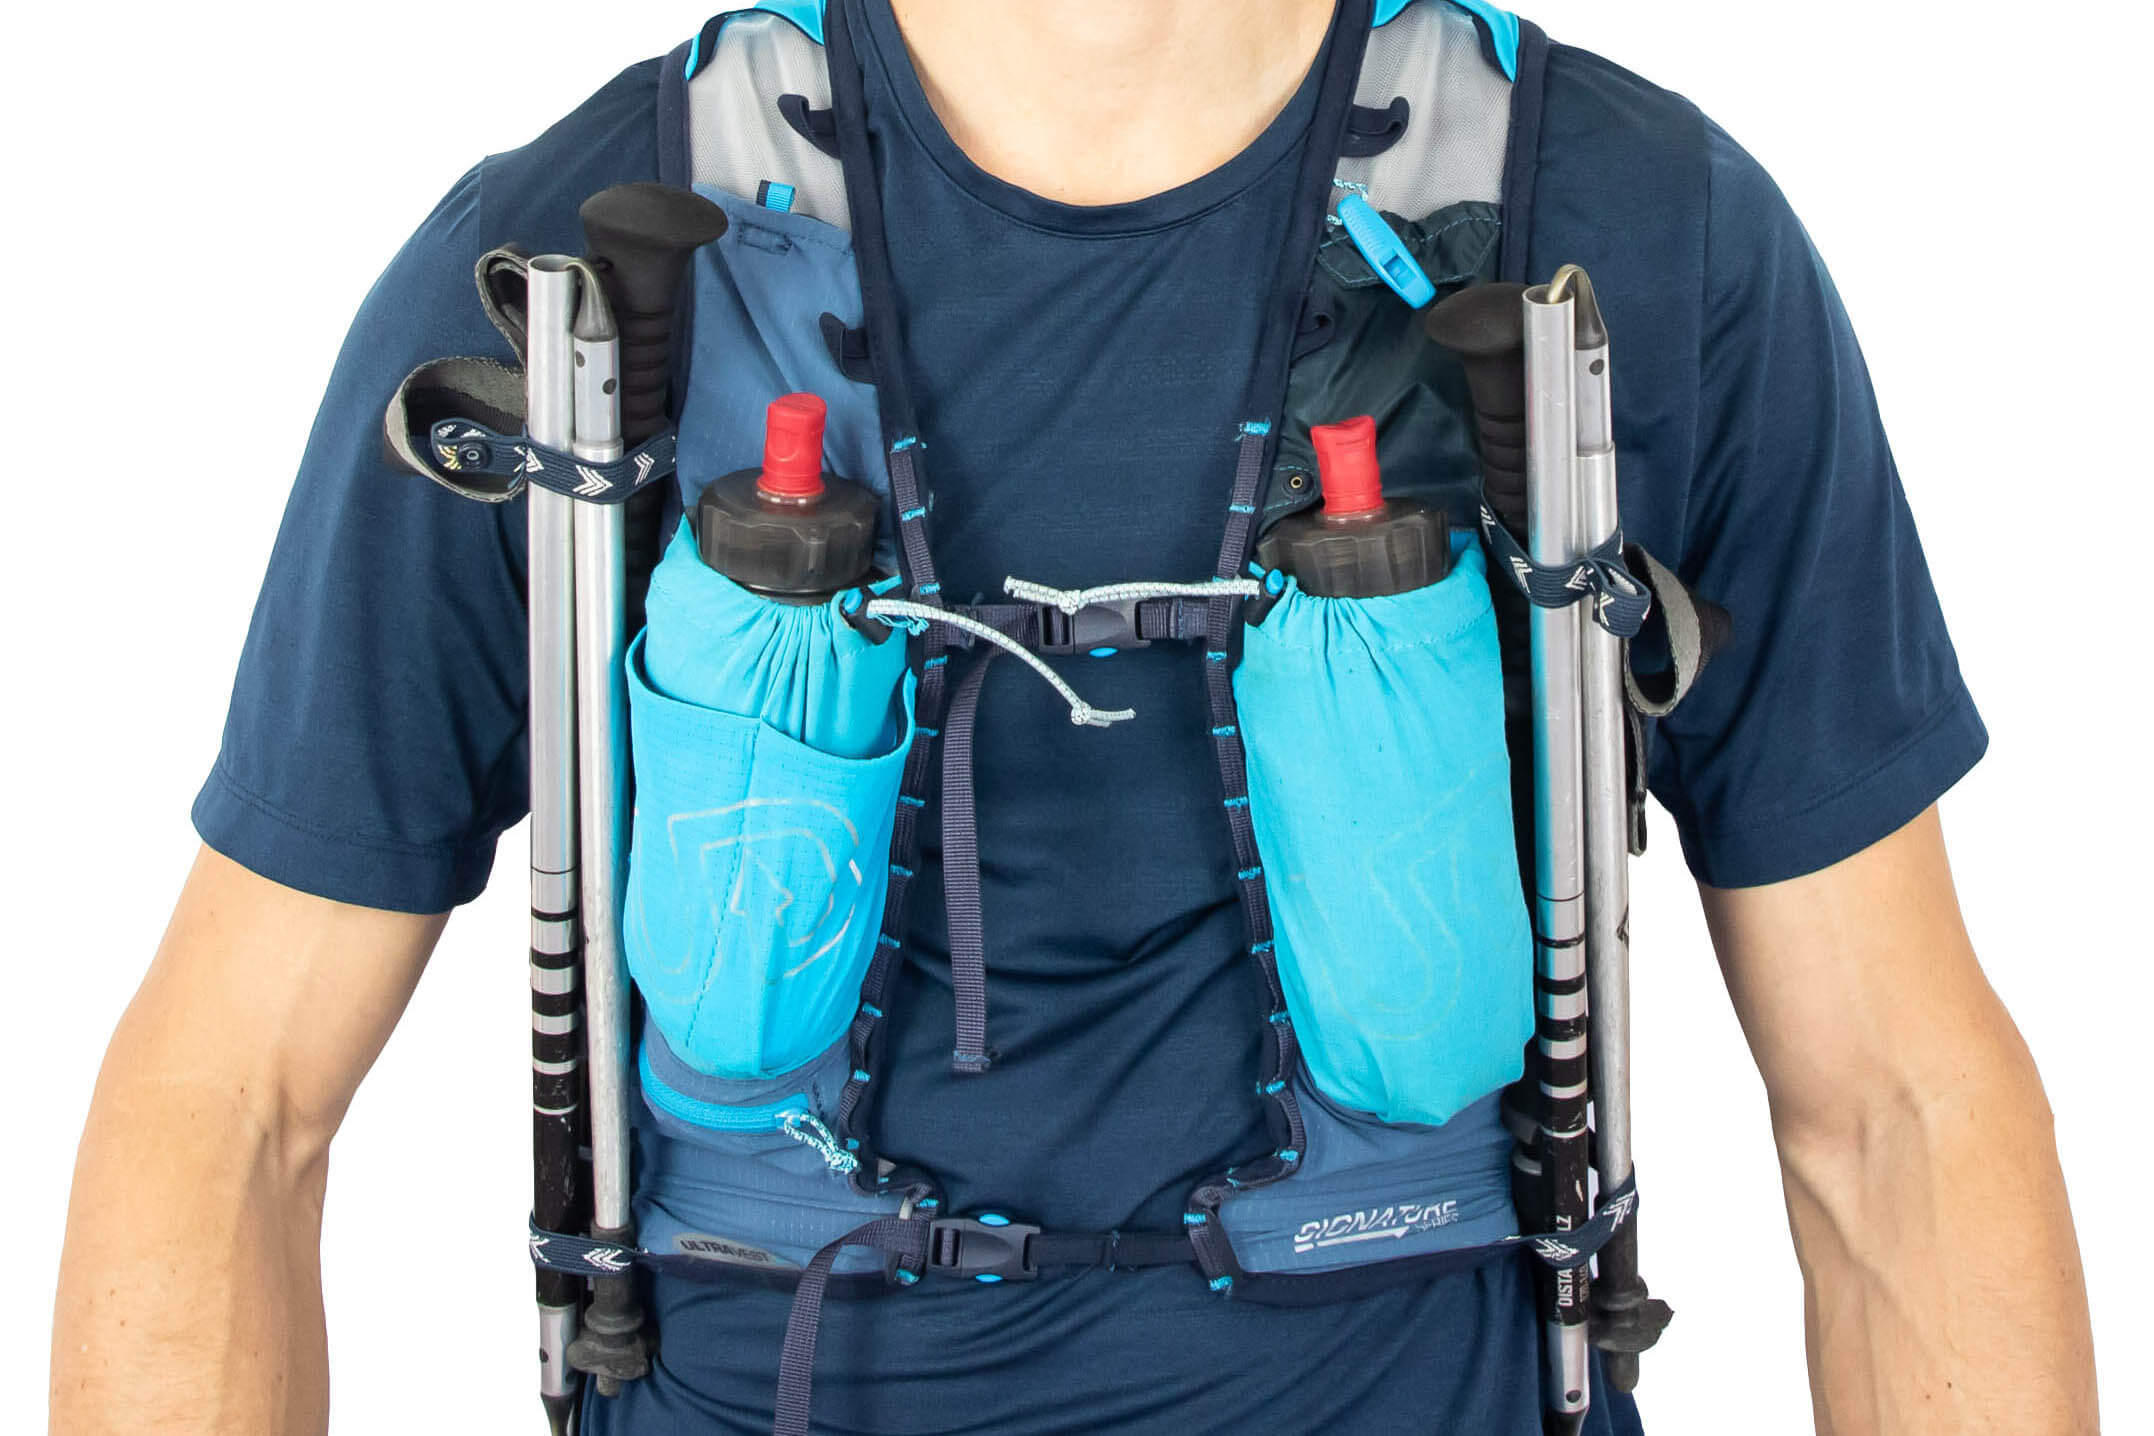 trekking pole loops on a vest